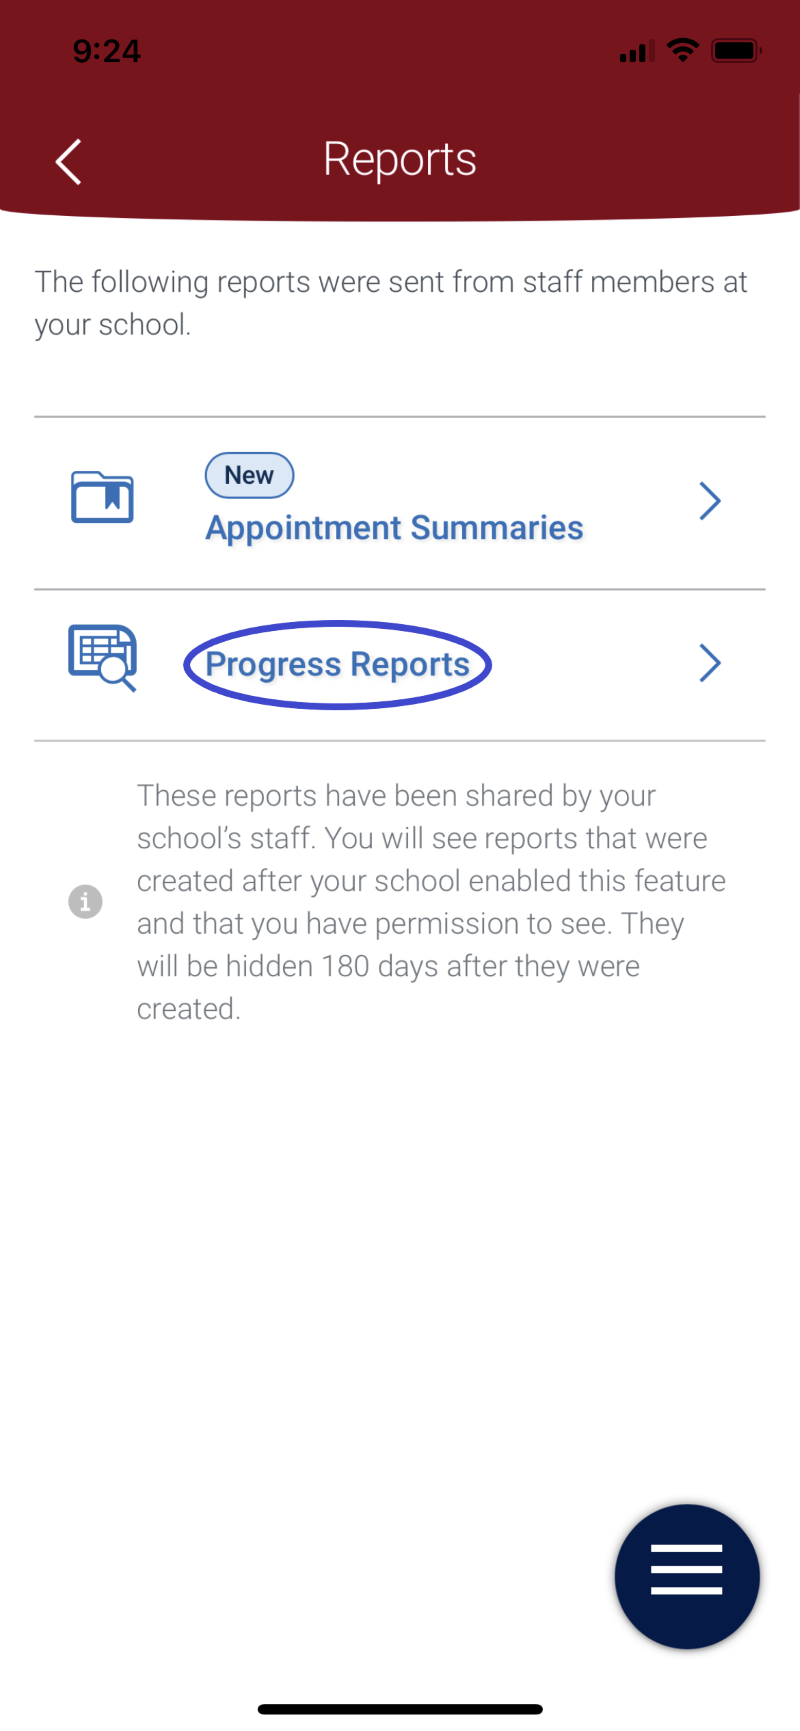 Select Progress Reports